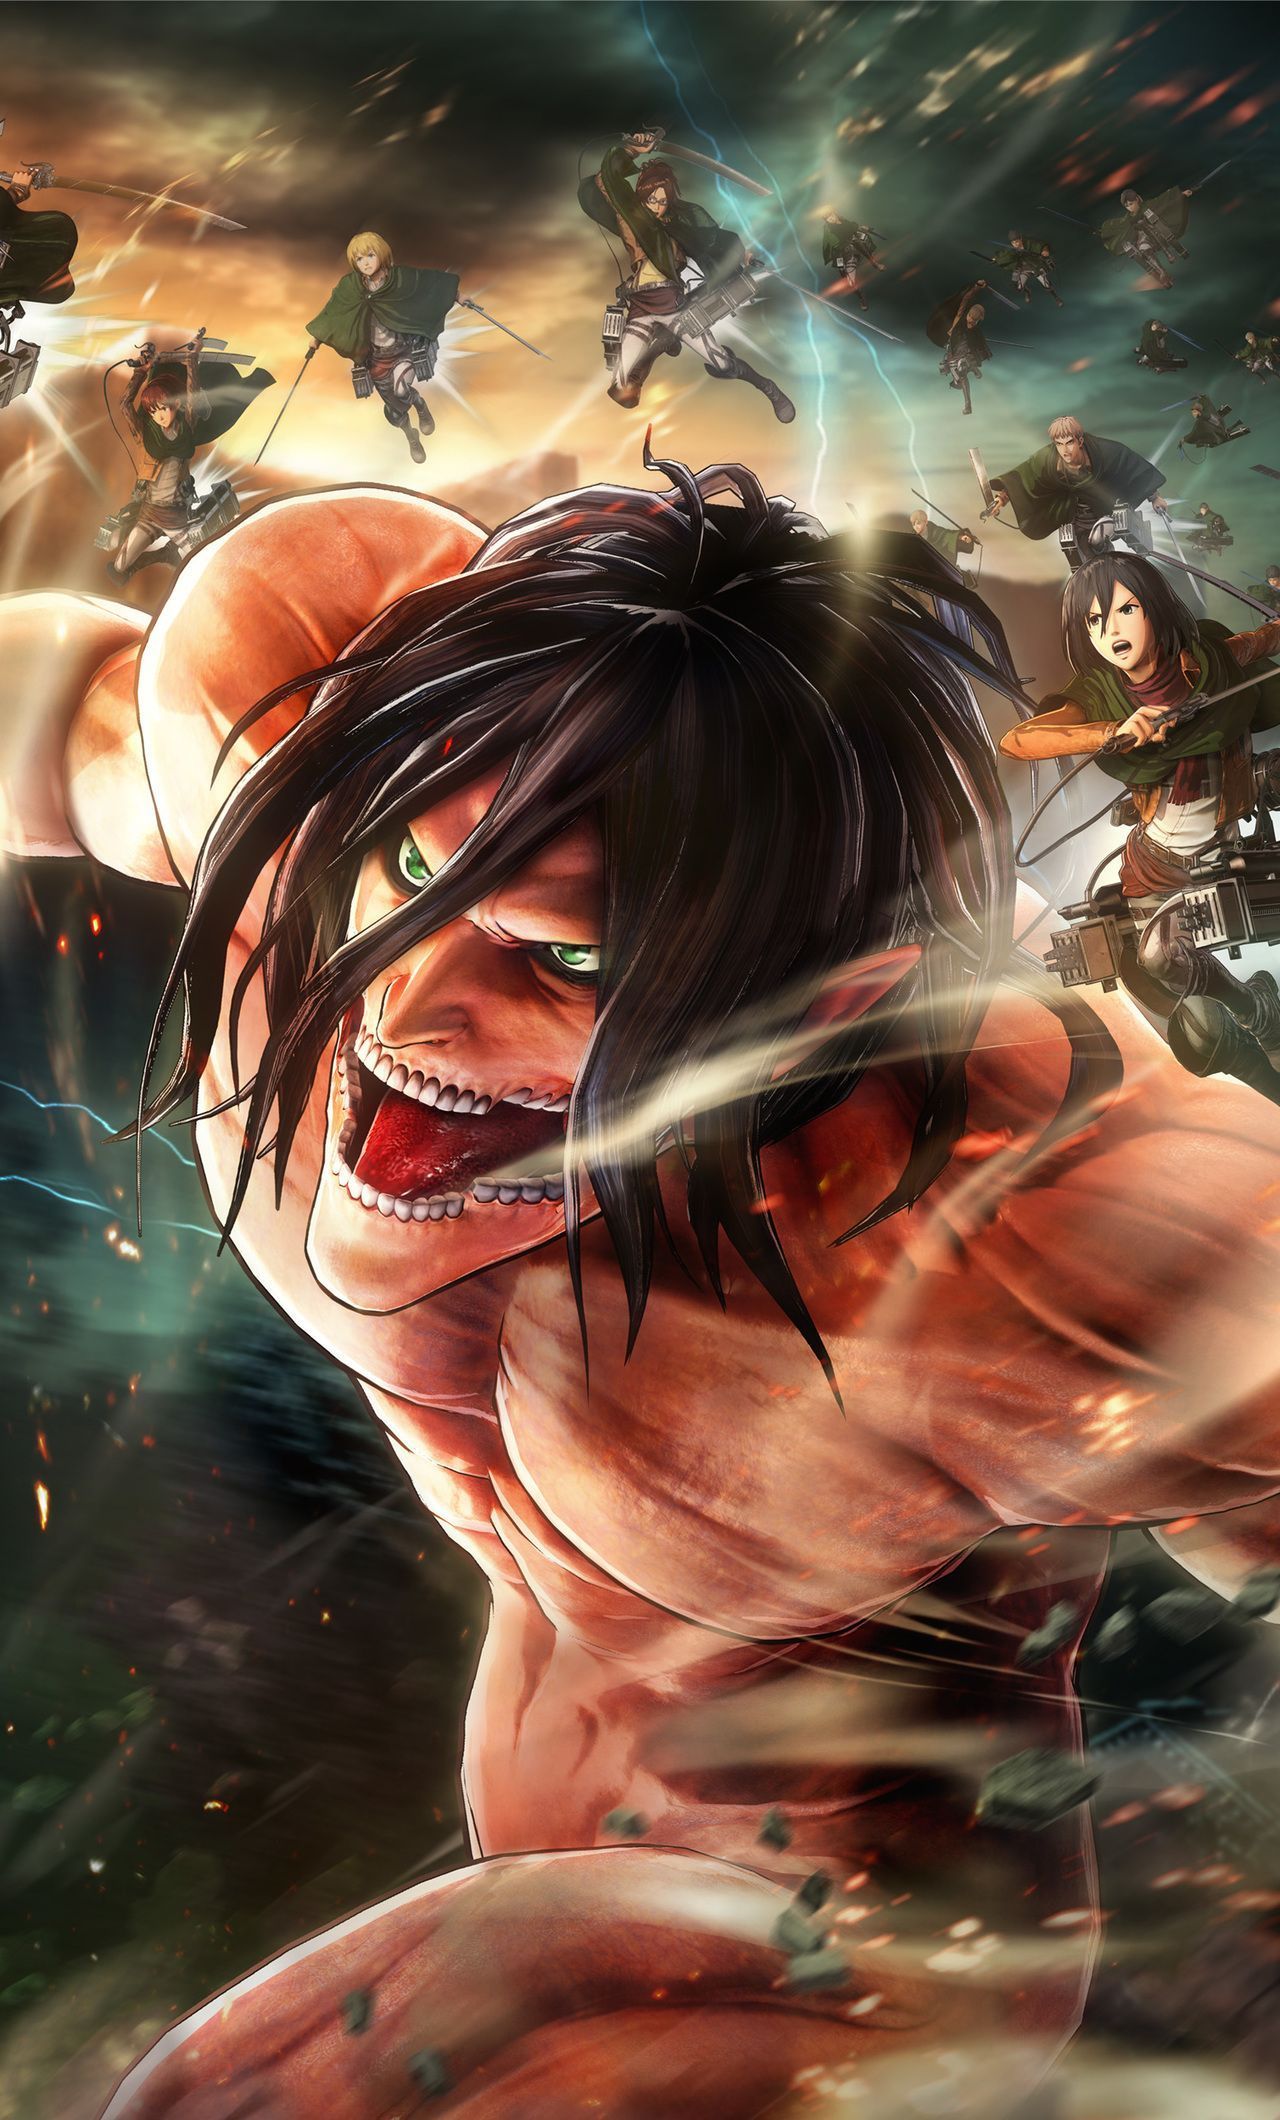 Attack On Titan Wallpaper iPhone Xr. Anime Wallpaper. Attack on titan art, Attack on titan anime, Attack on titan eren